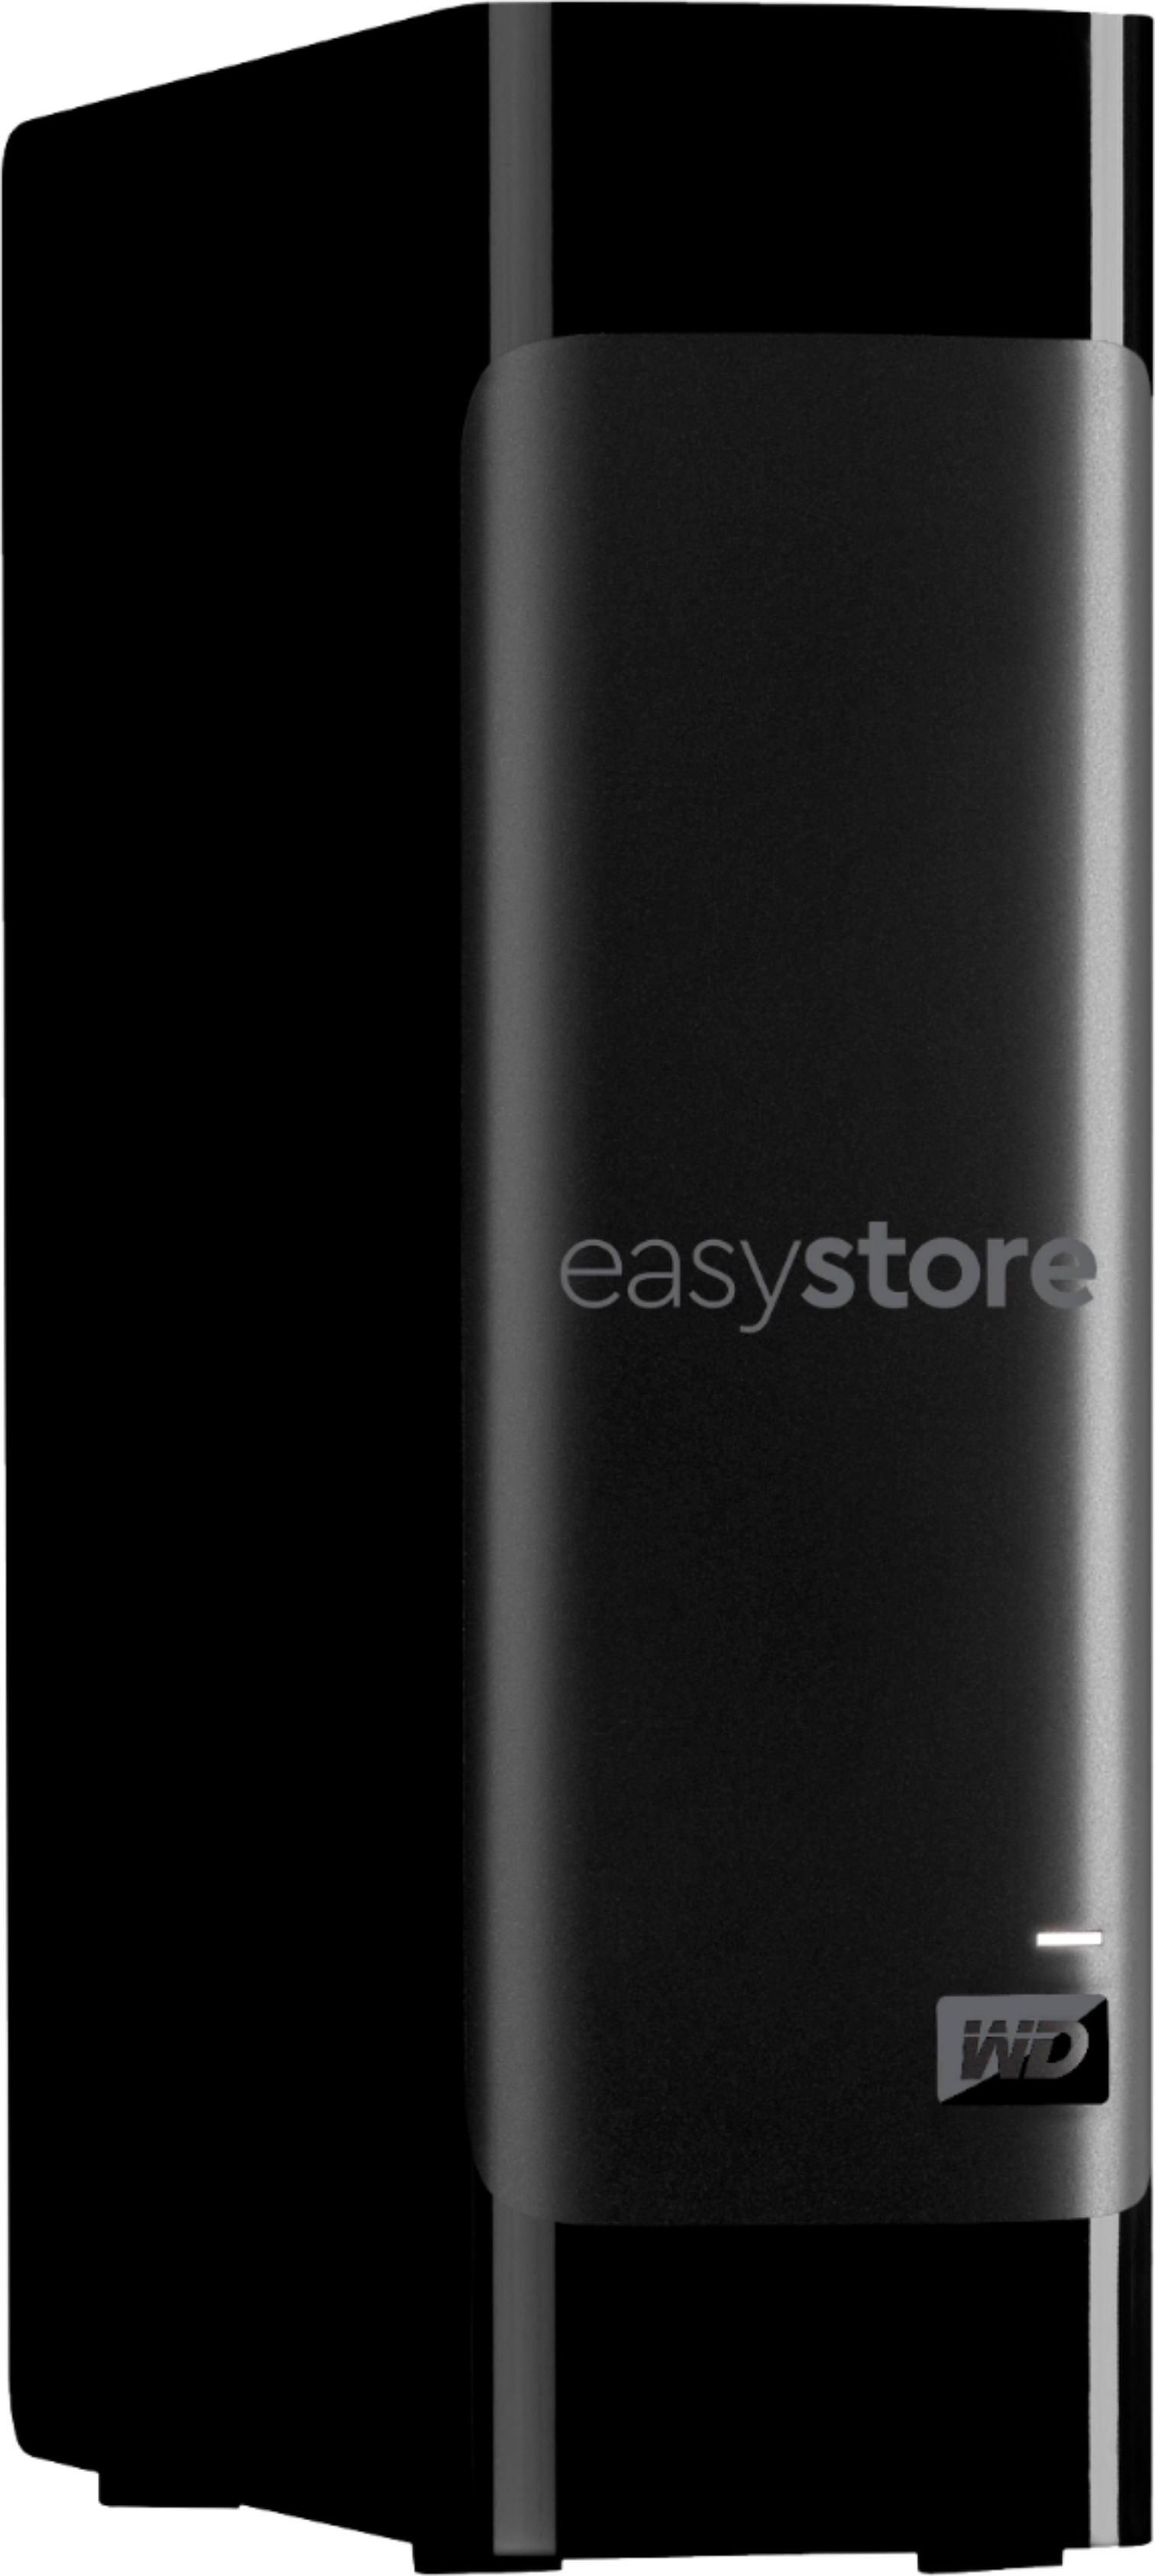 WD easystore 14TB Best USB Black Drive External WDBAMA0140HBK-NESN - Hard 3.0 Buy